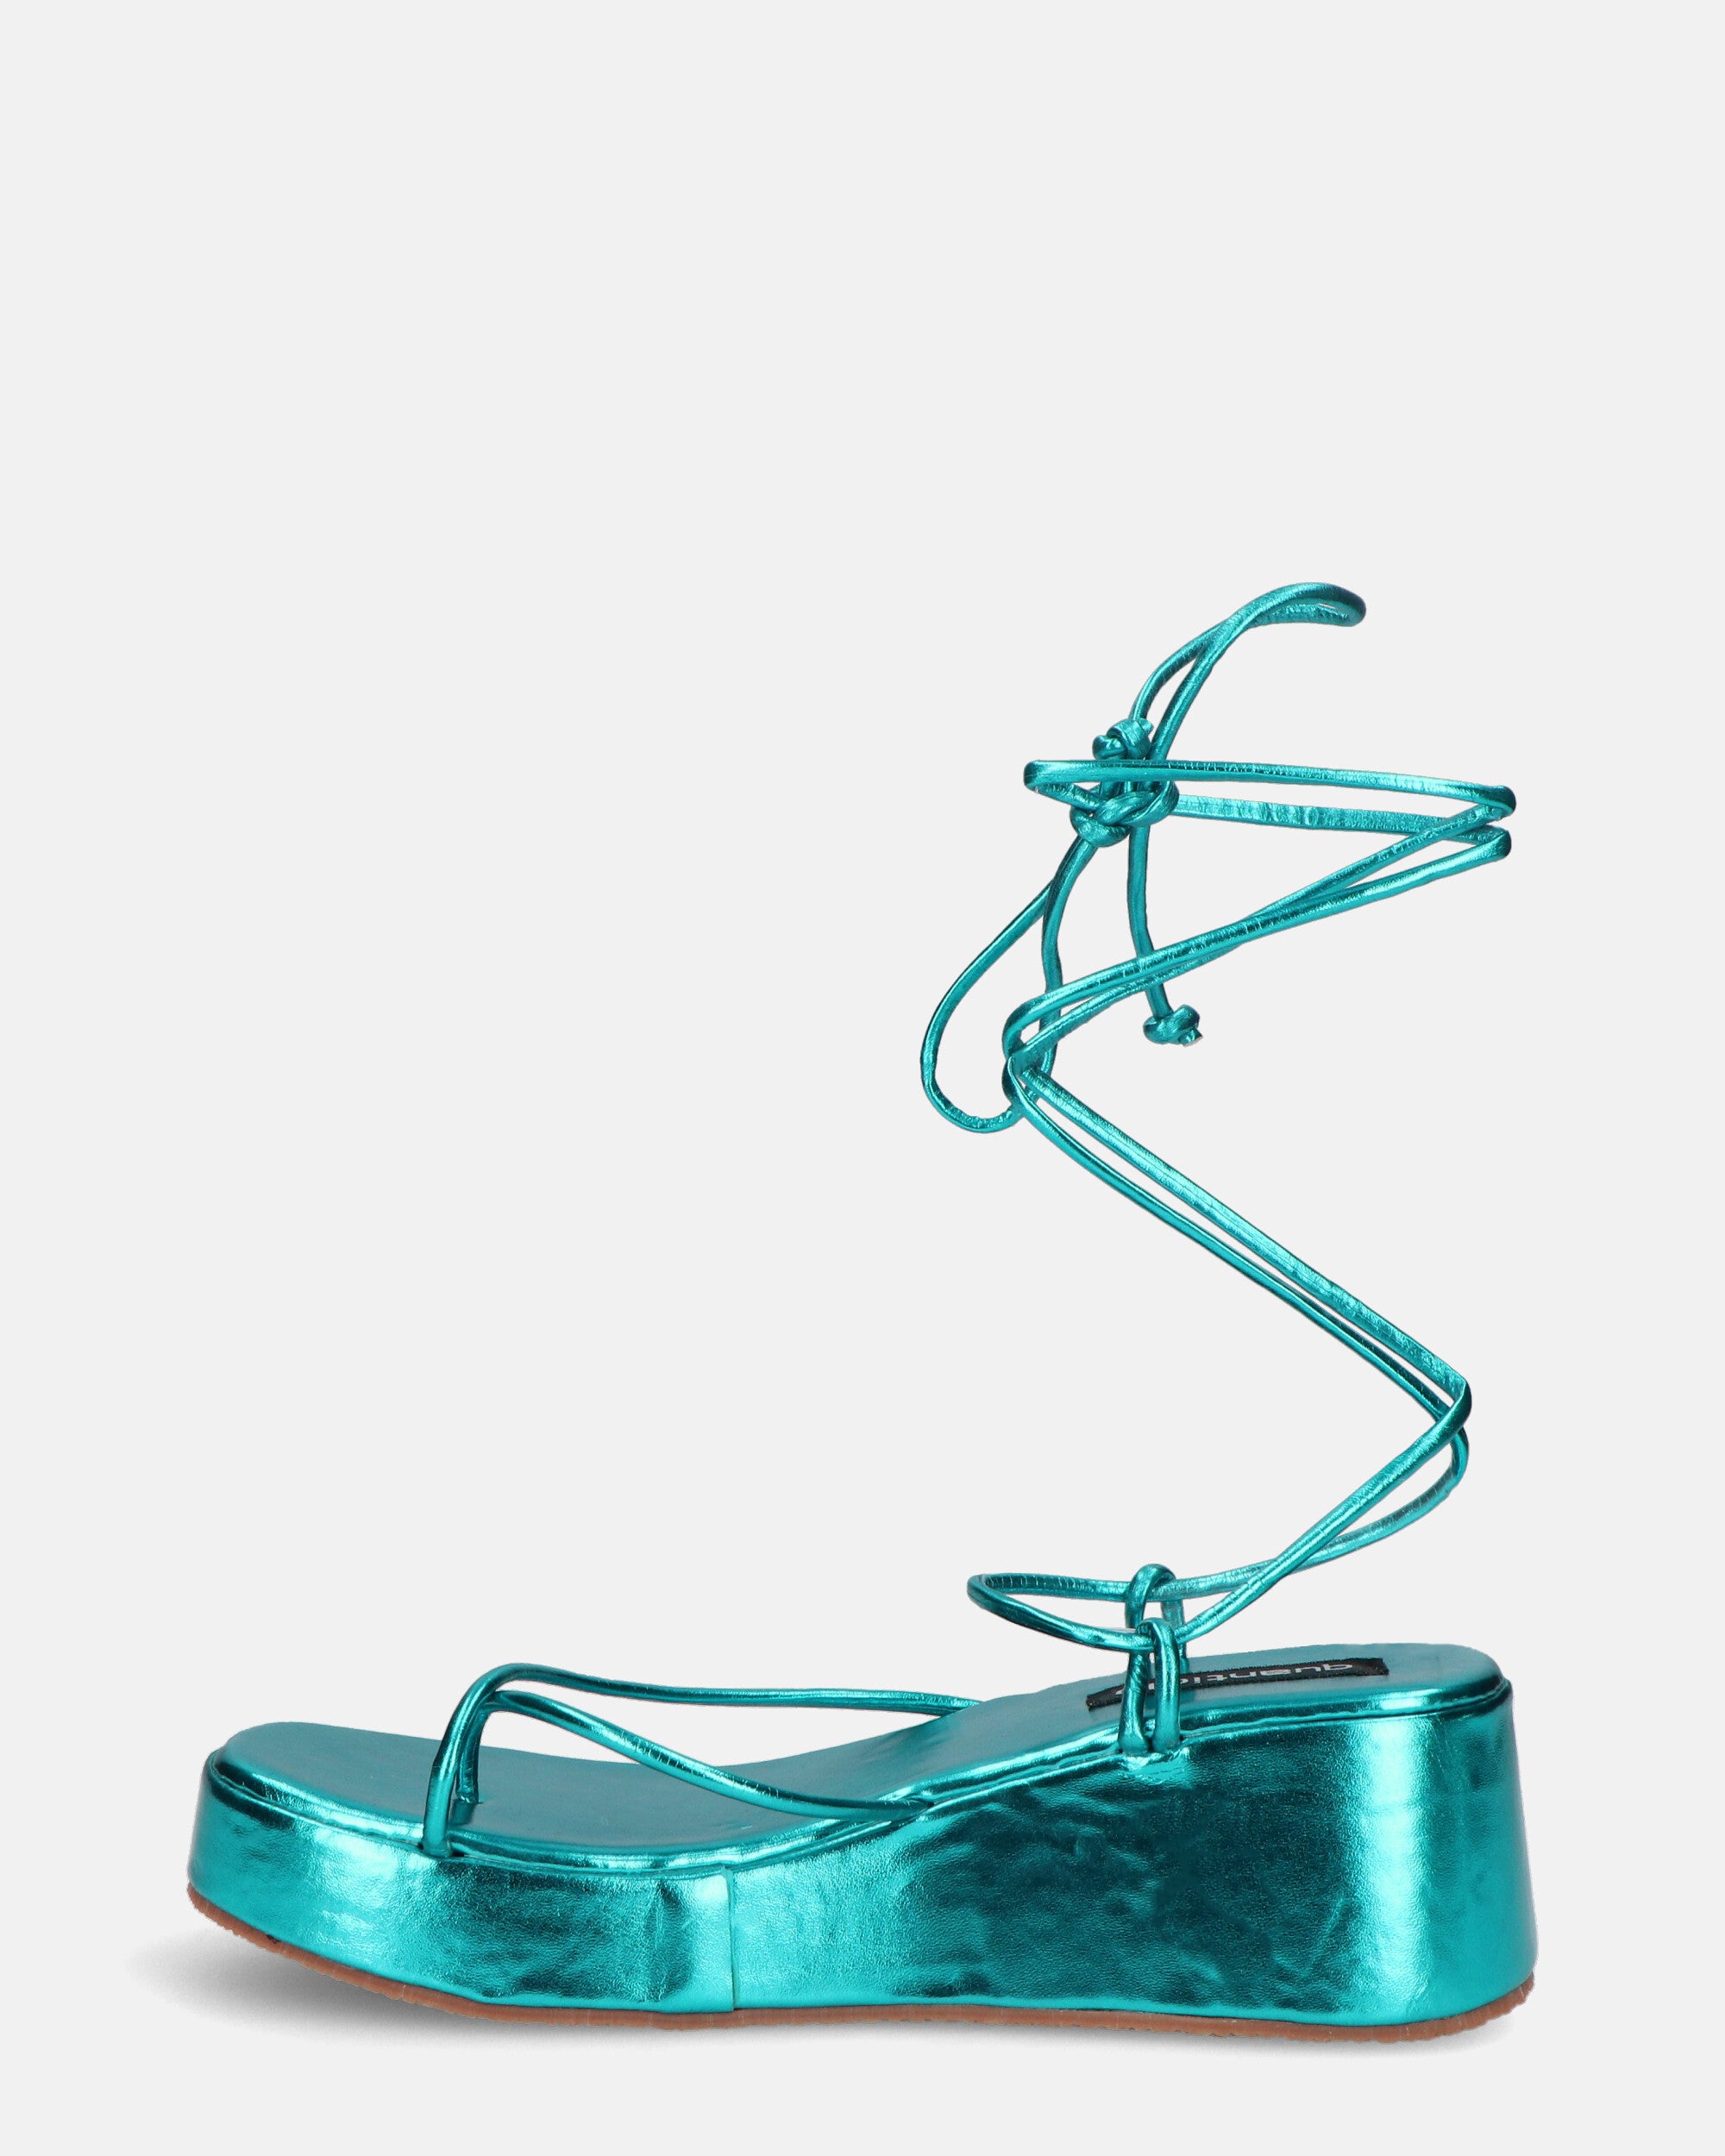 COHILA - sandalias en glassy aguamarina con plataforma